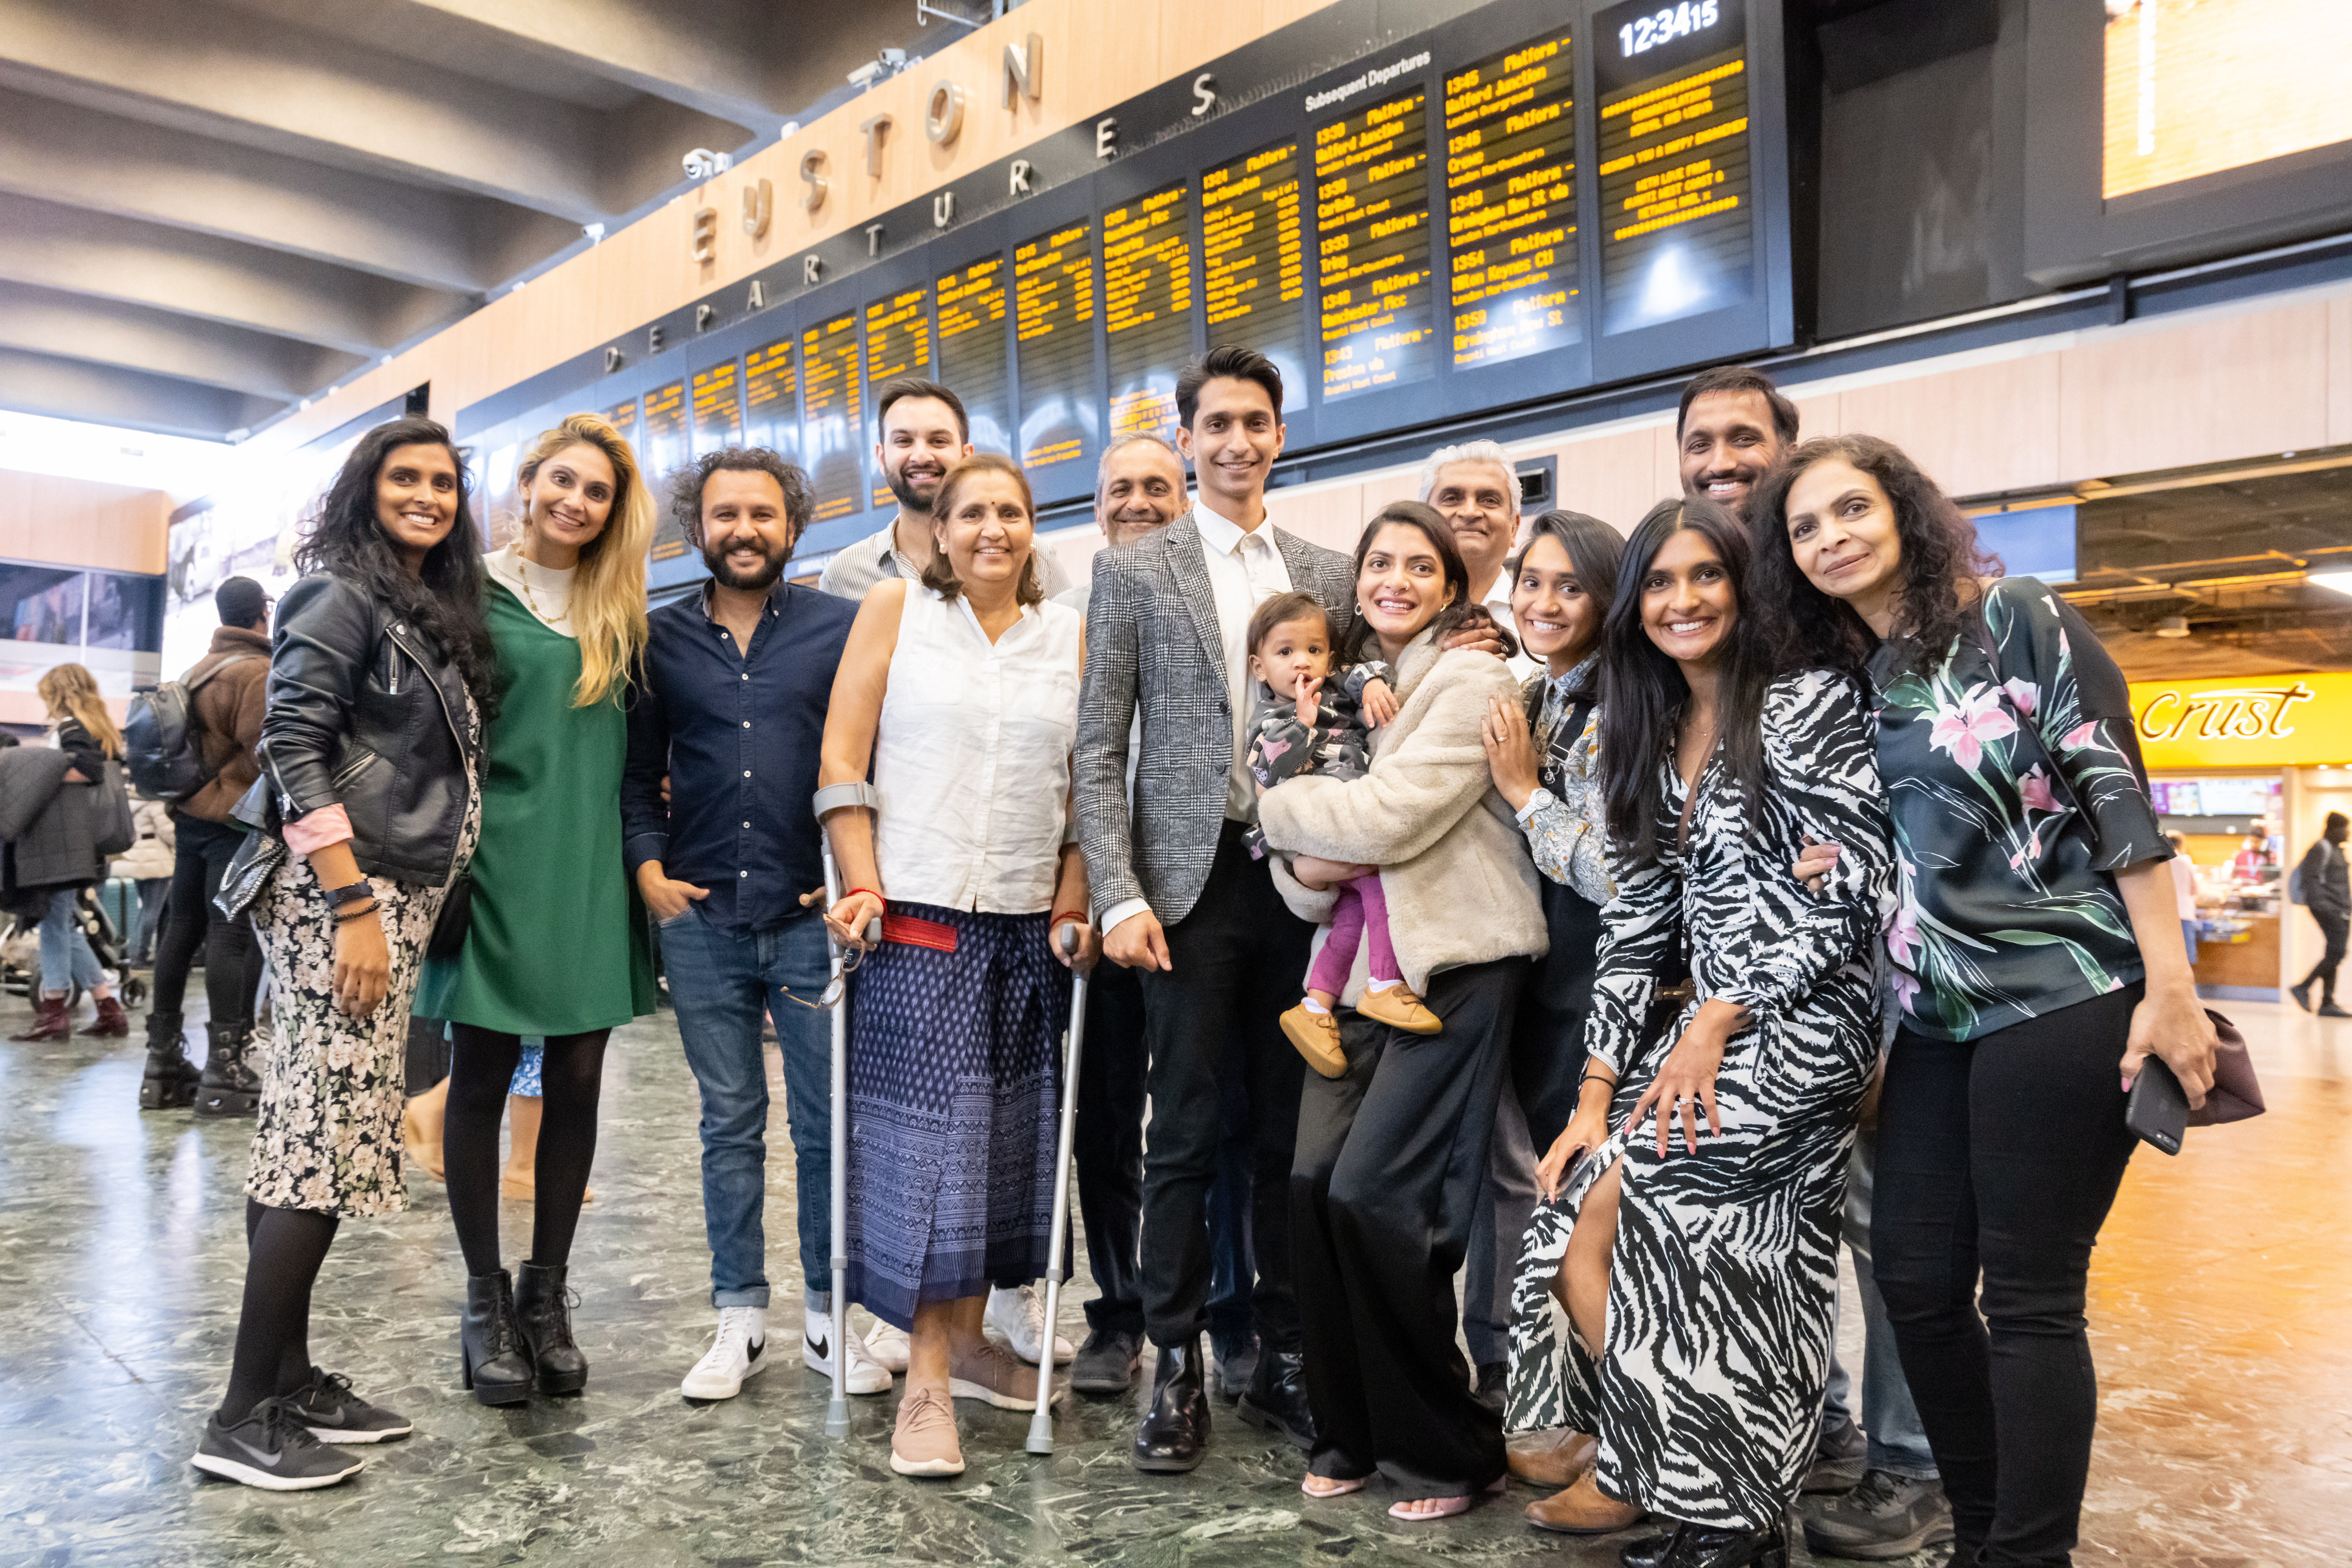 Nirmal Chohan and Vidya Patel with family at Euston Station